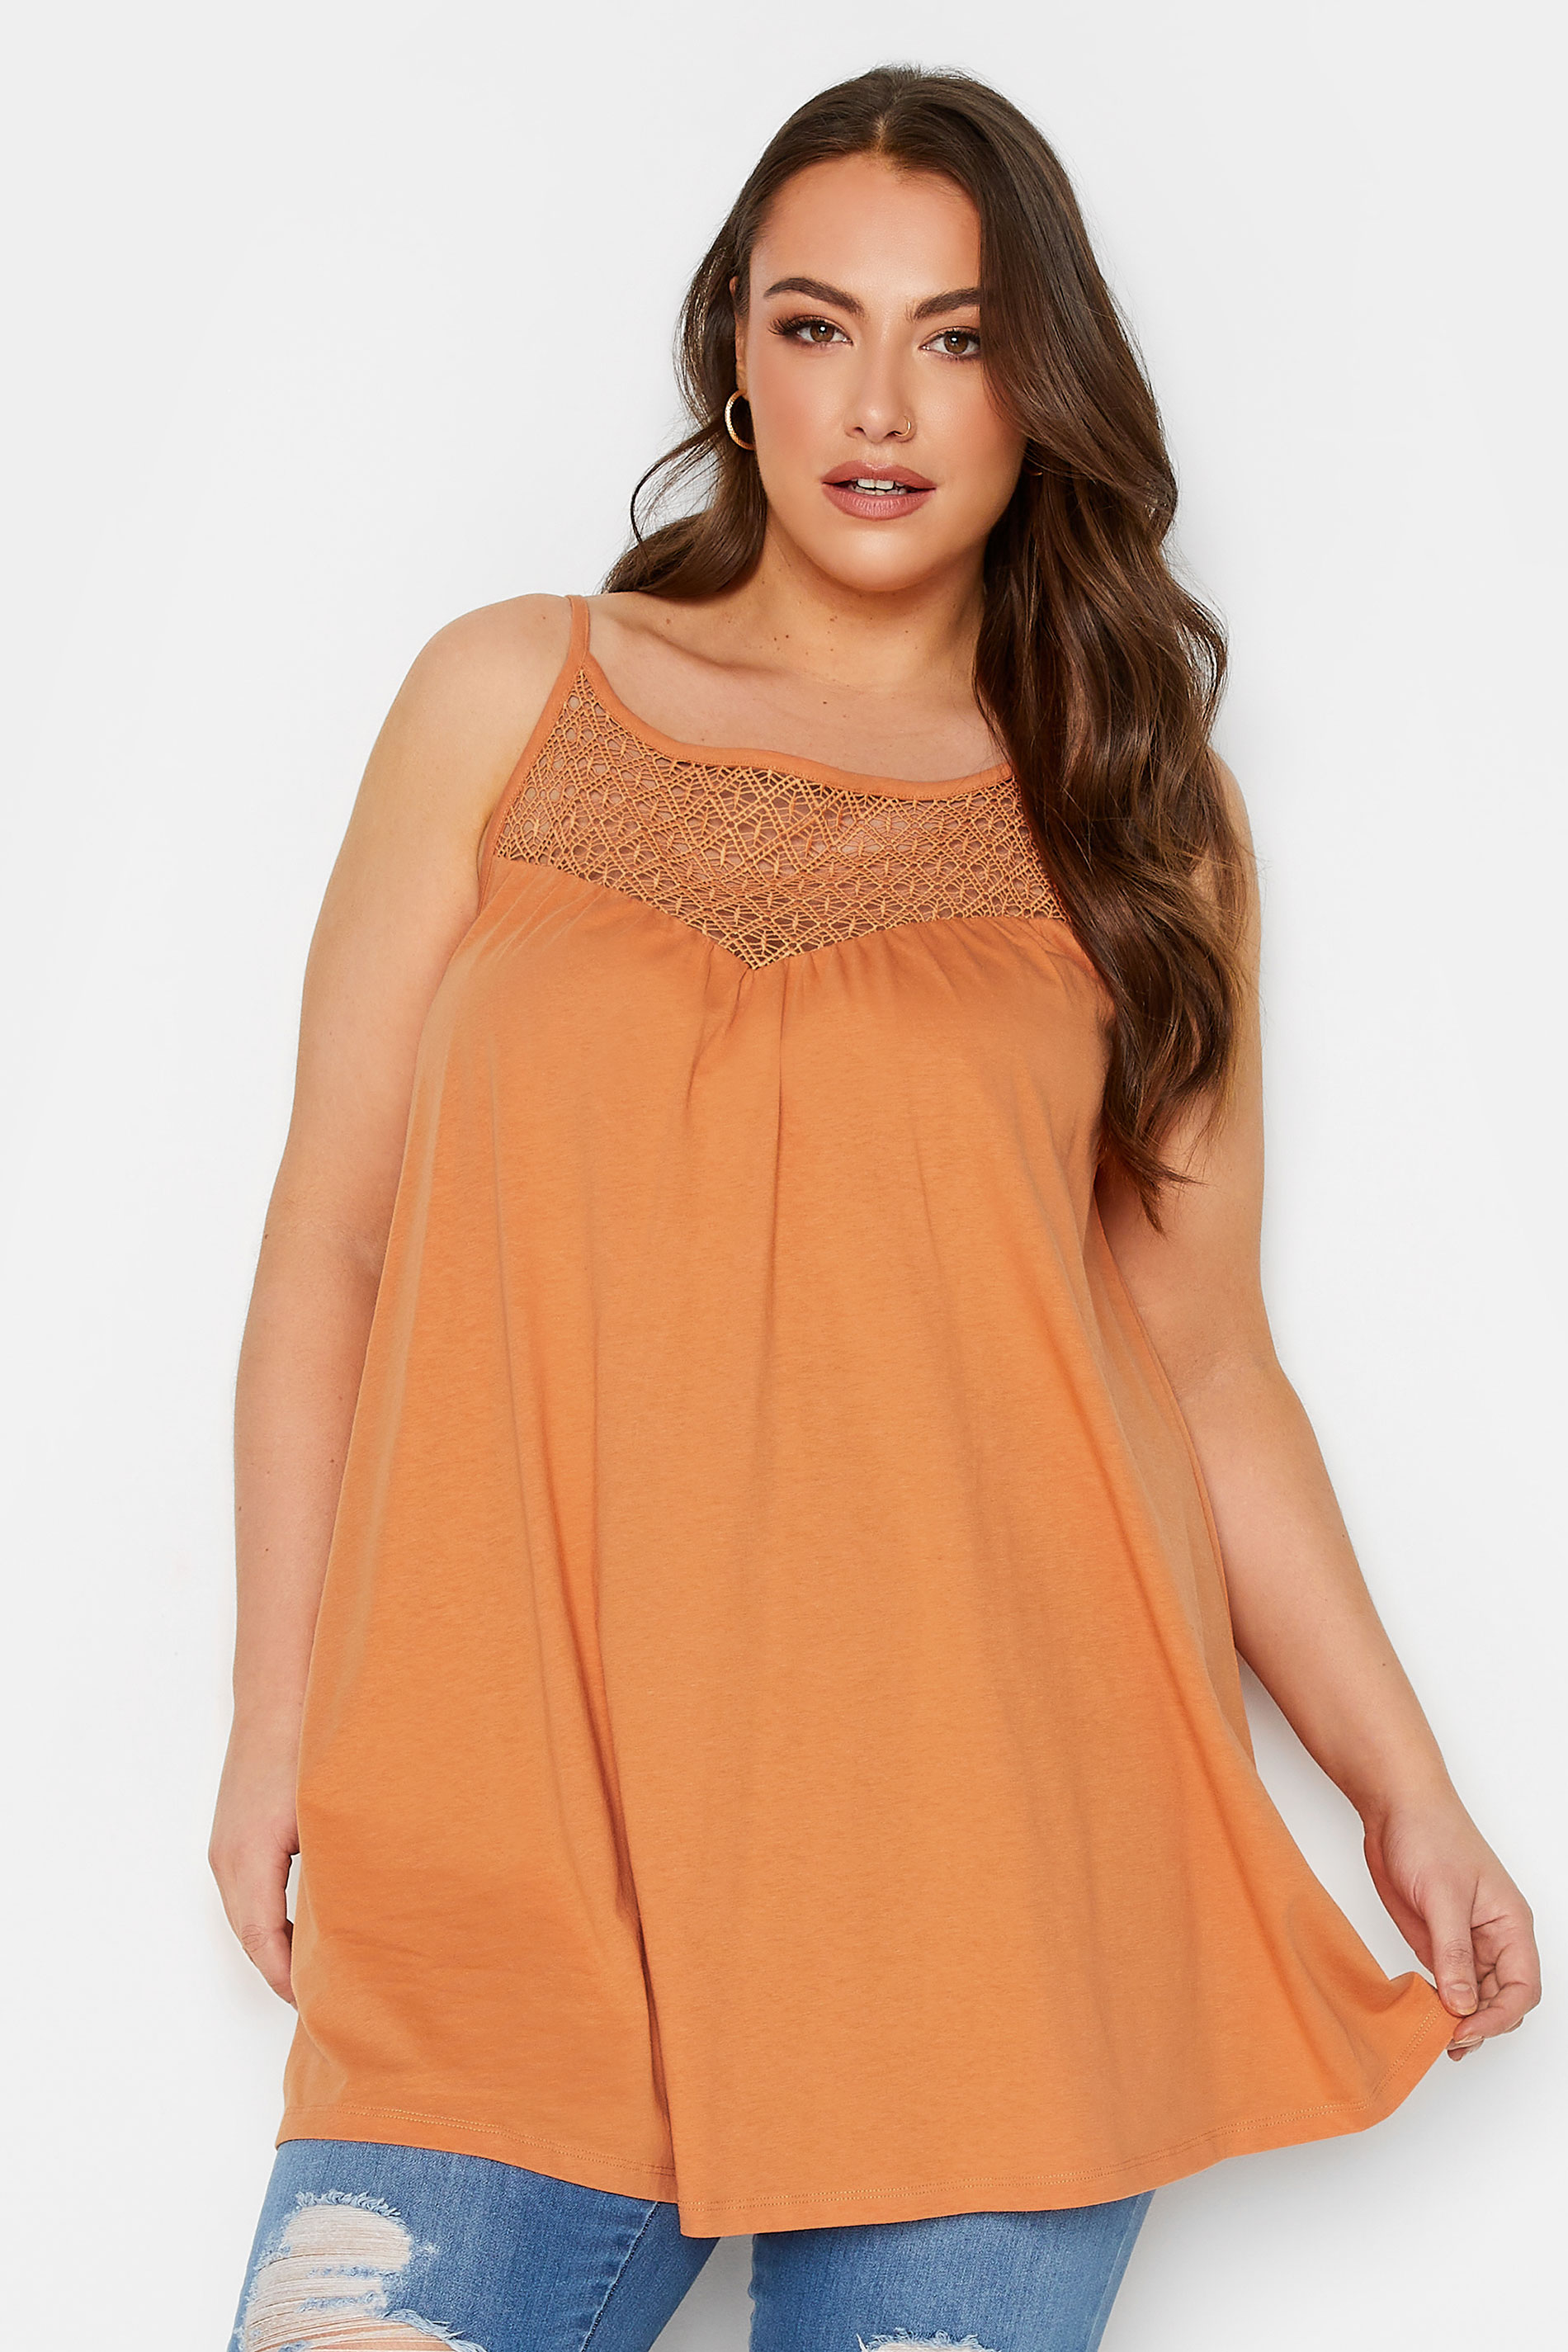 YOURS Plus Size Orange Crochet Vest Top | Yours Clothing  1